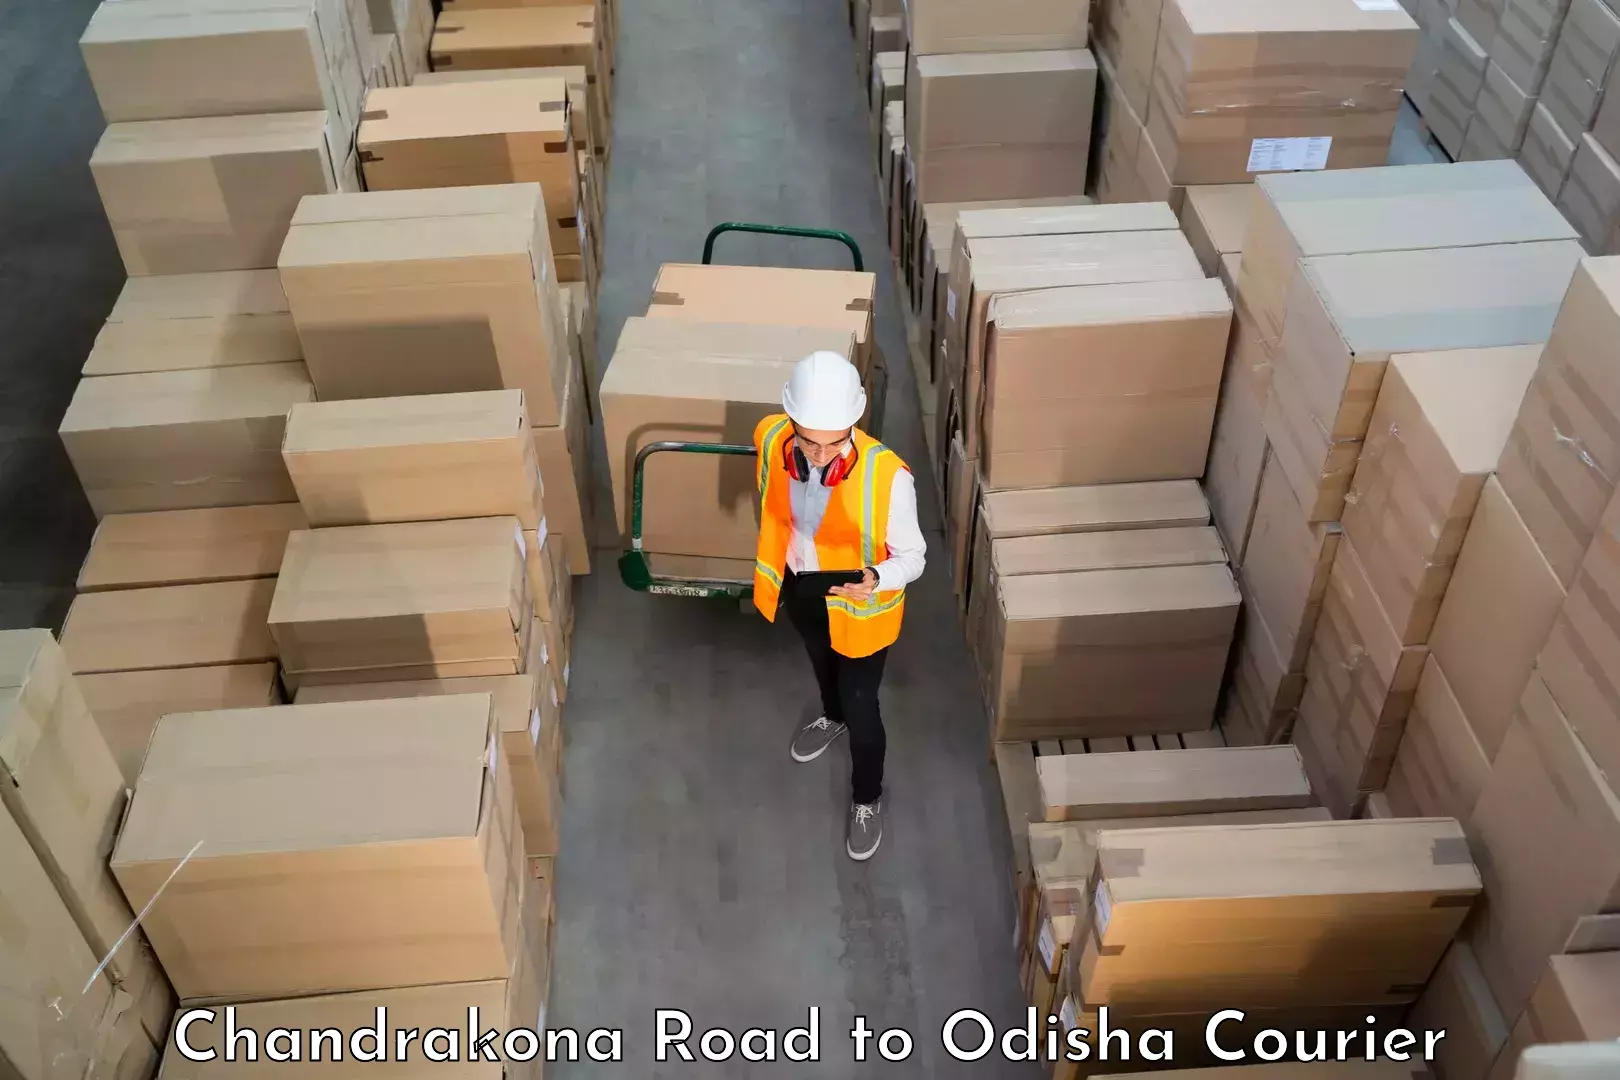 Furniture moving experts Chandrakona Road to Badagada